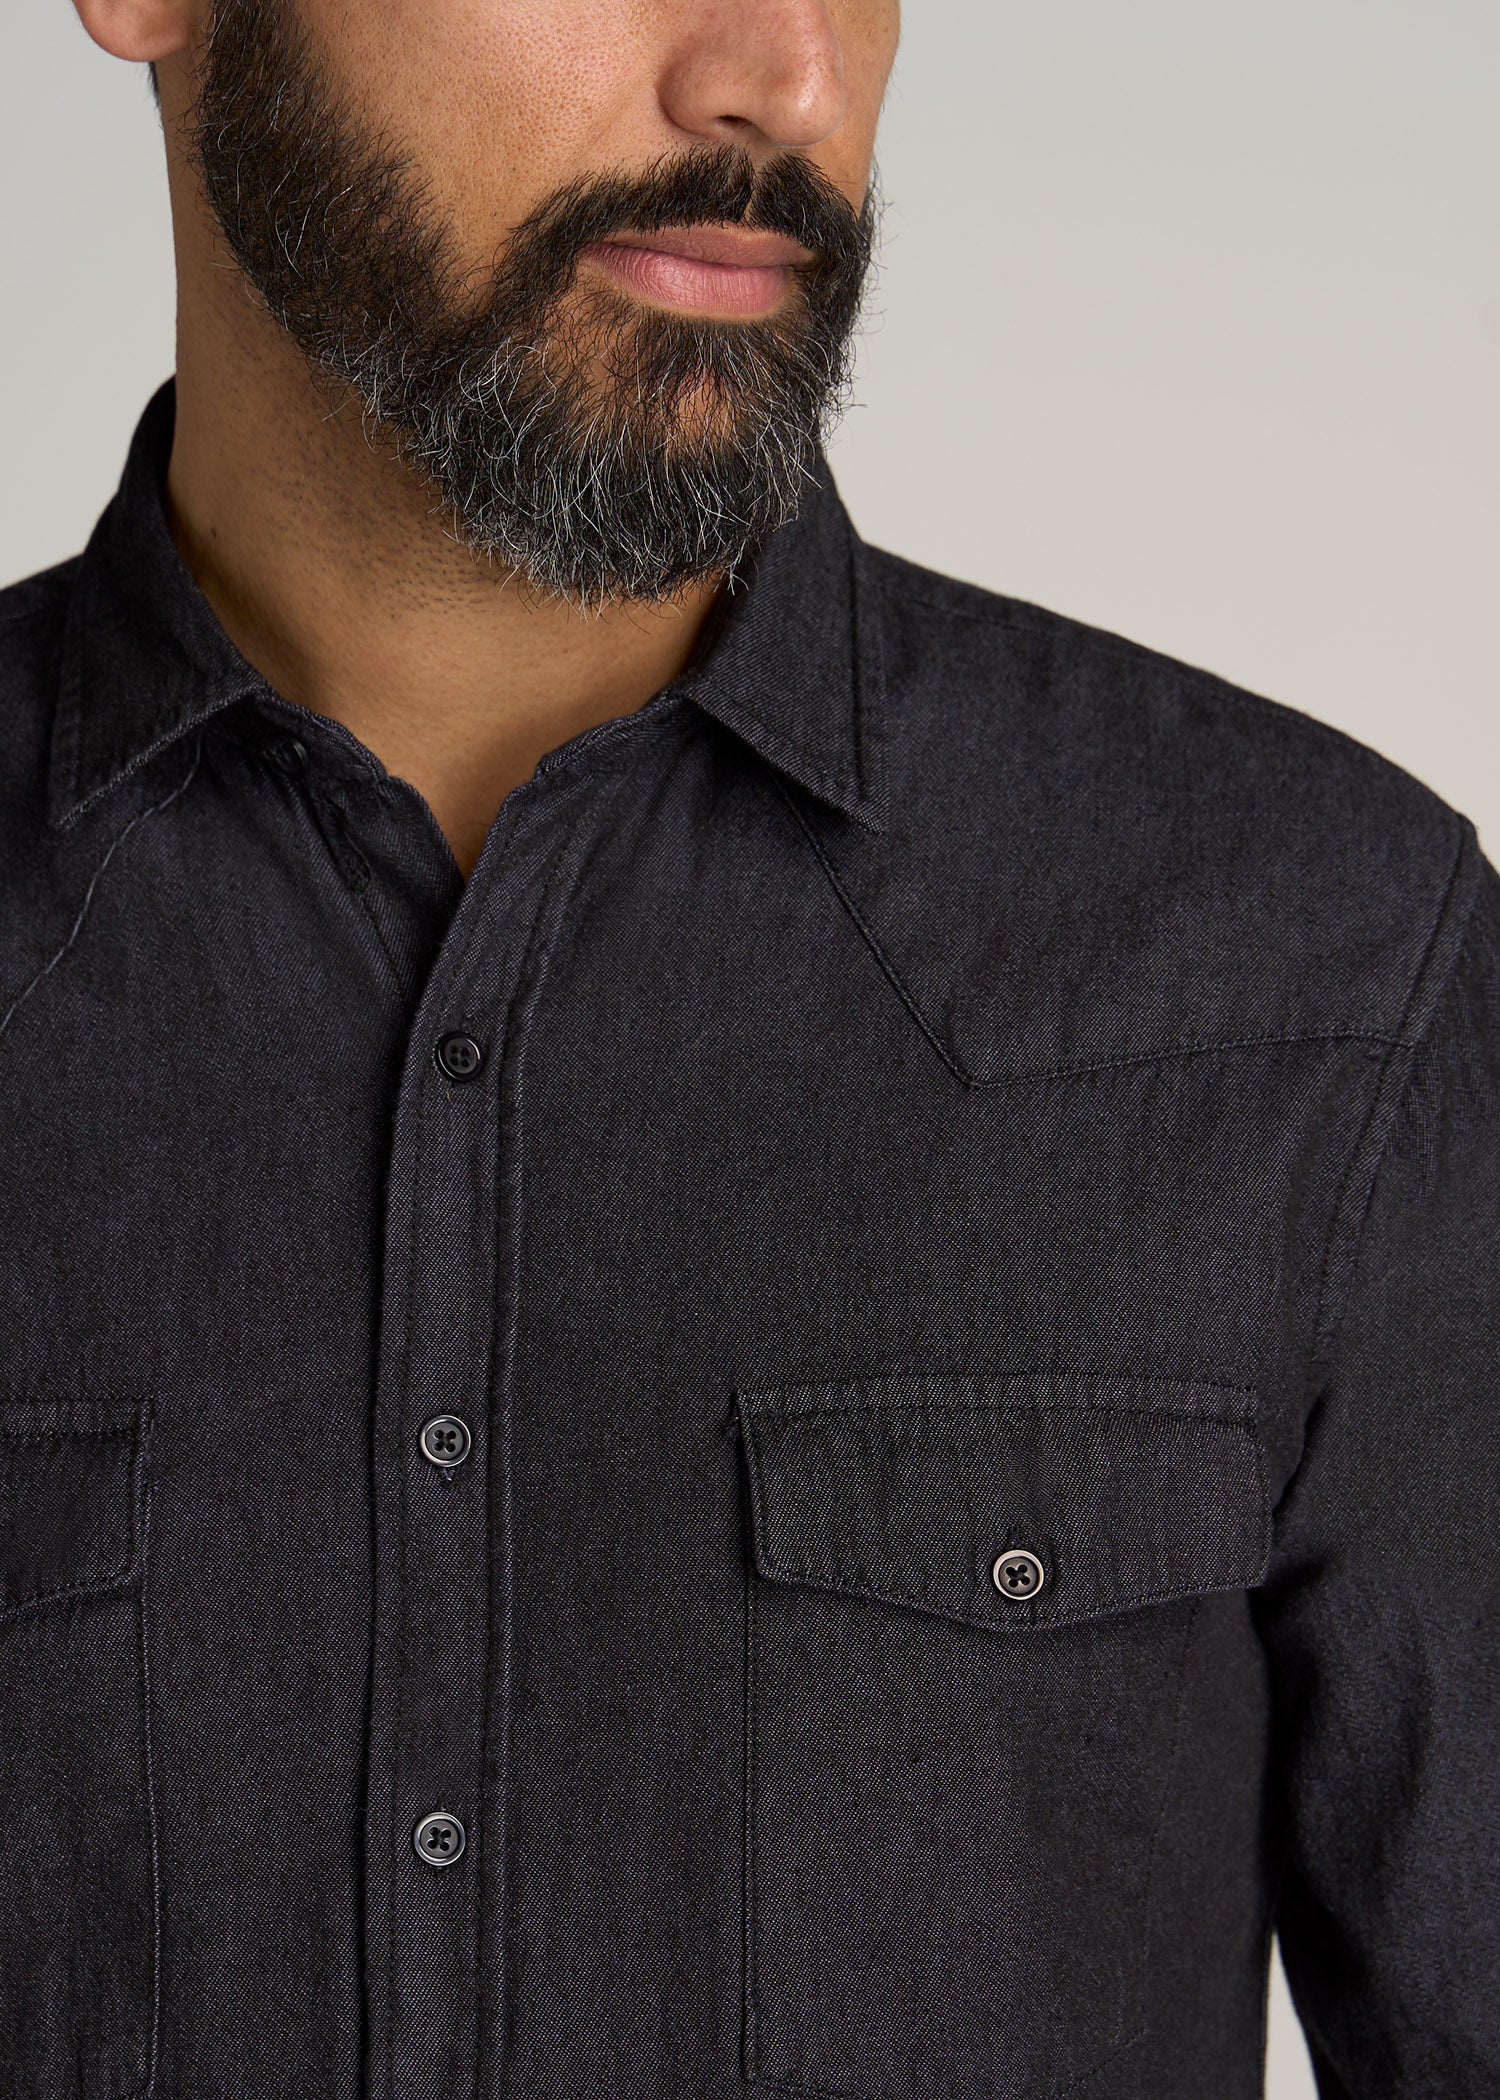 Men's Denim Shirts | Black & Grey Jean Shirts | JACK & JONES